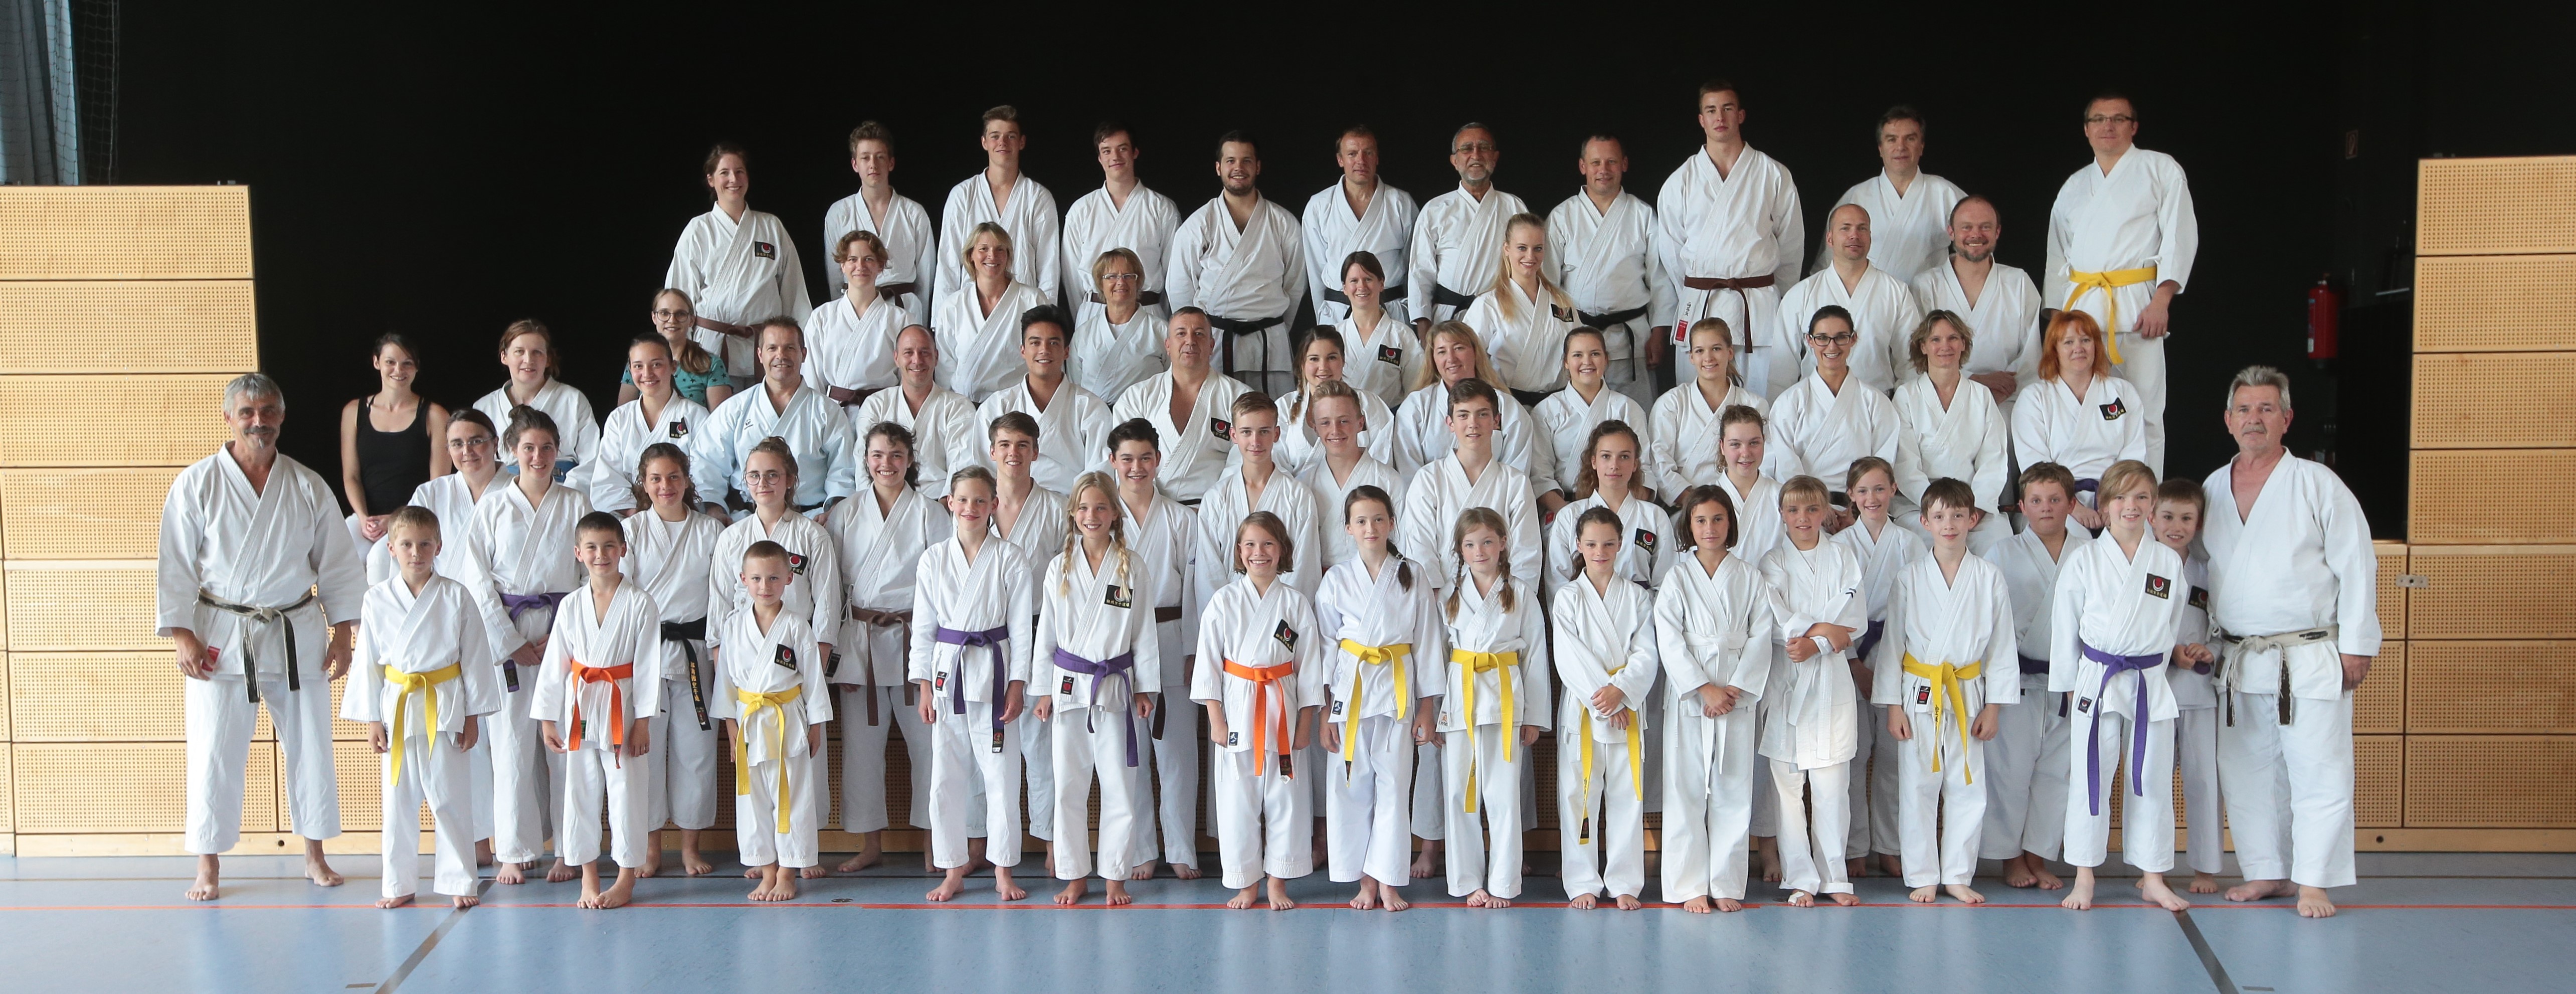 JKA Karate Donaueschingen - Startseite